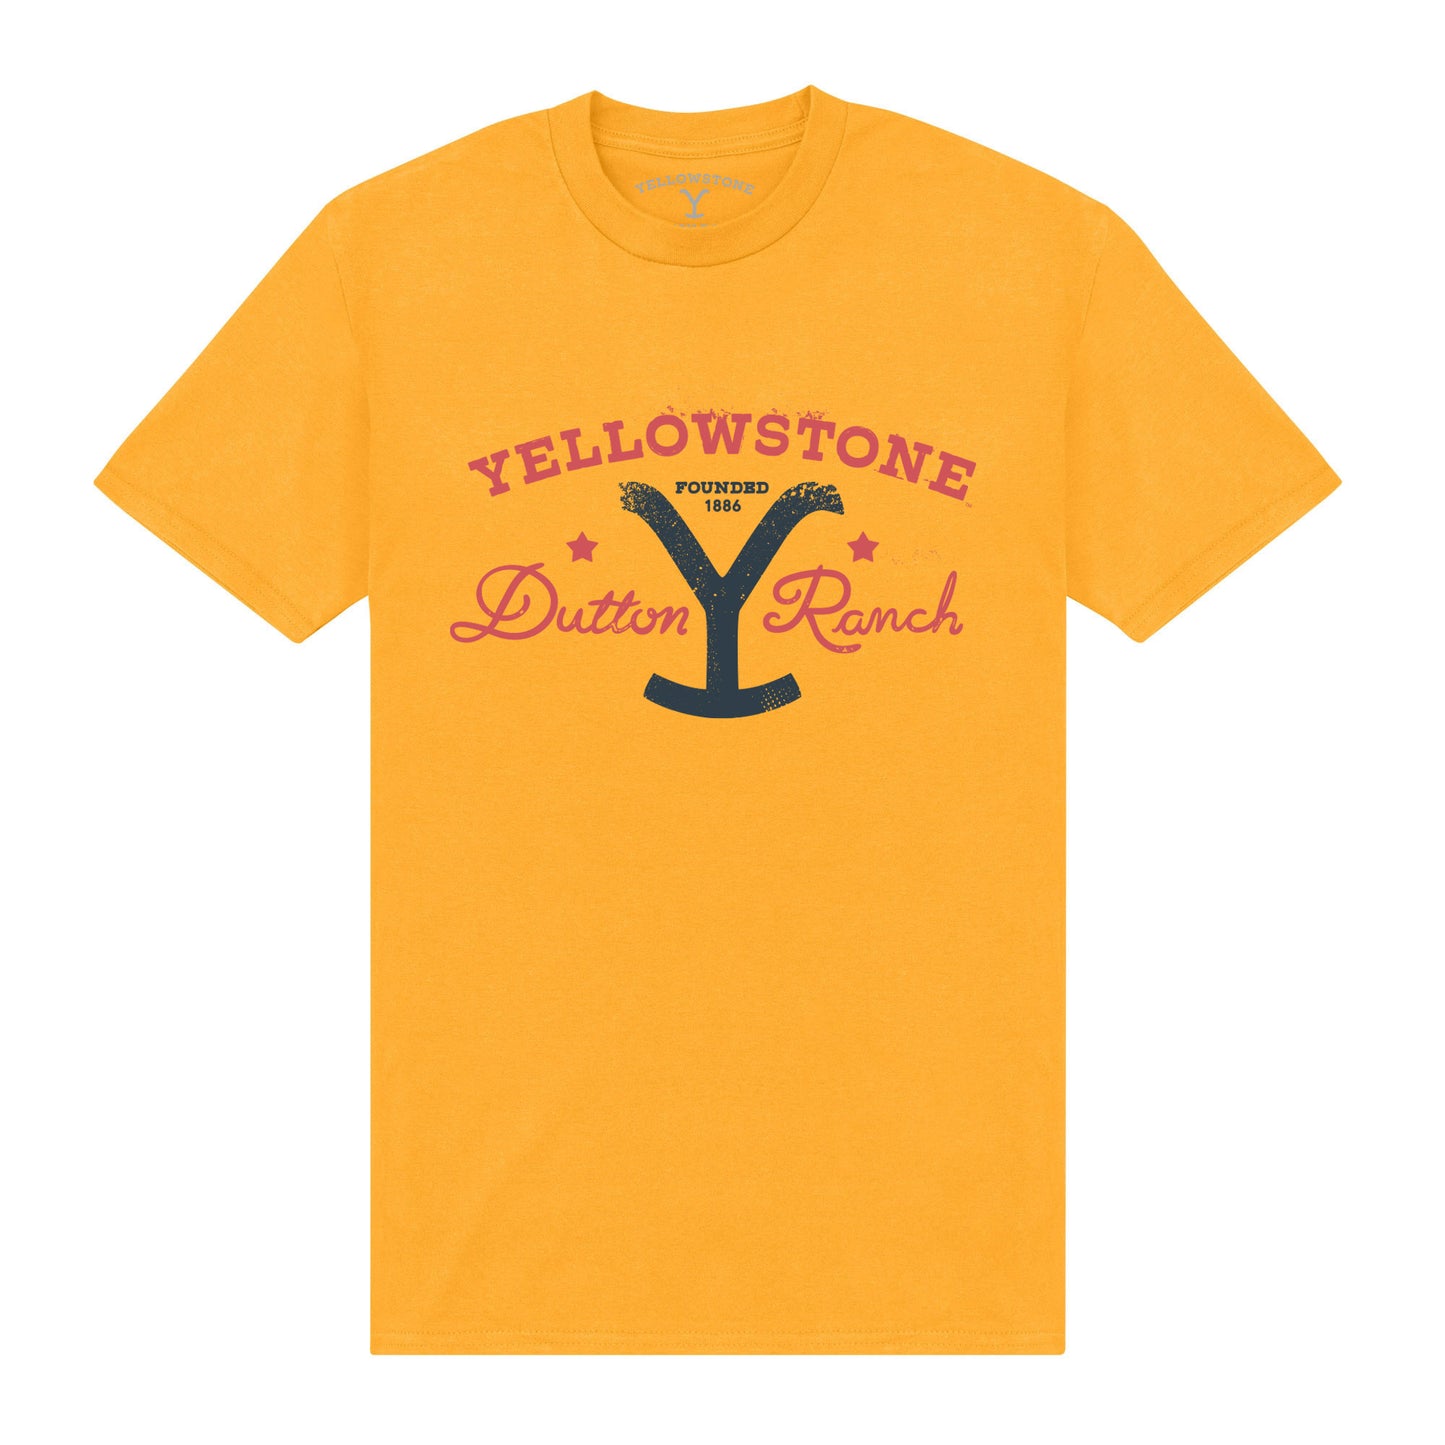 Yellowstone 1886 T-Shirt